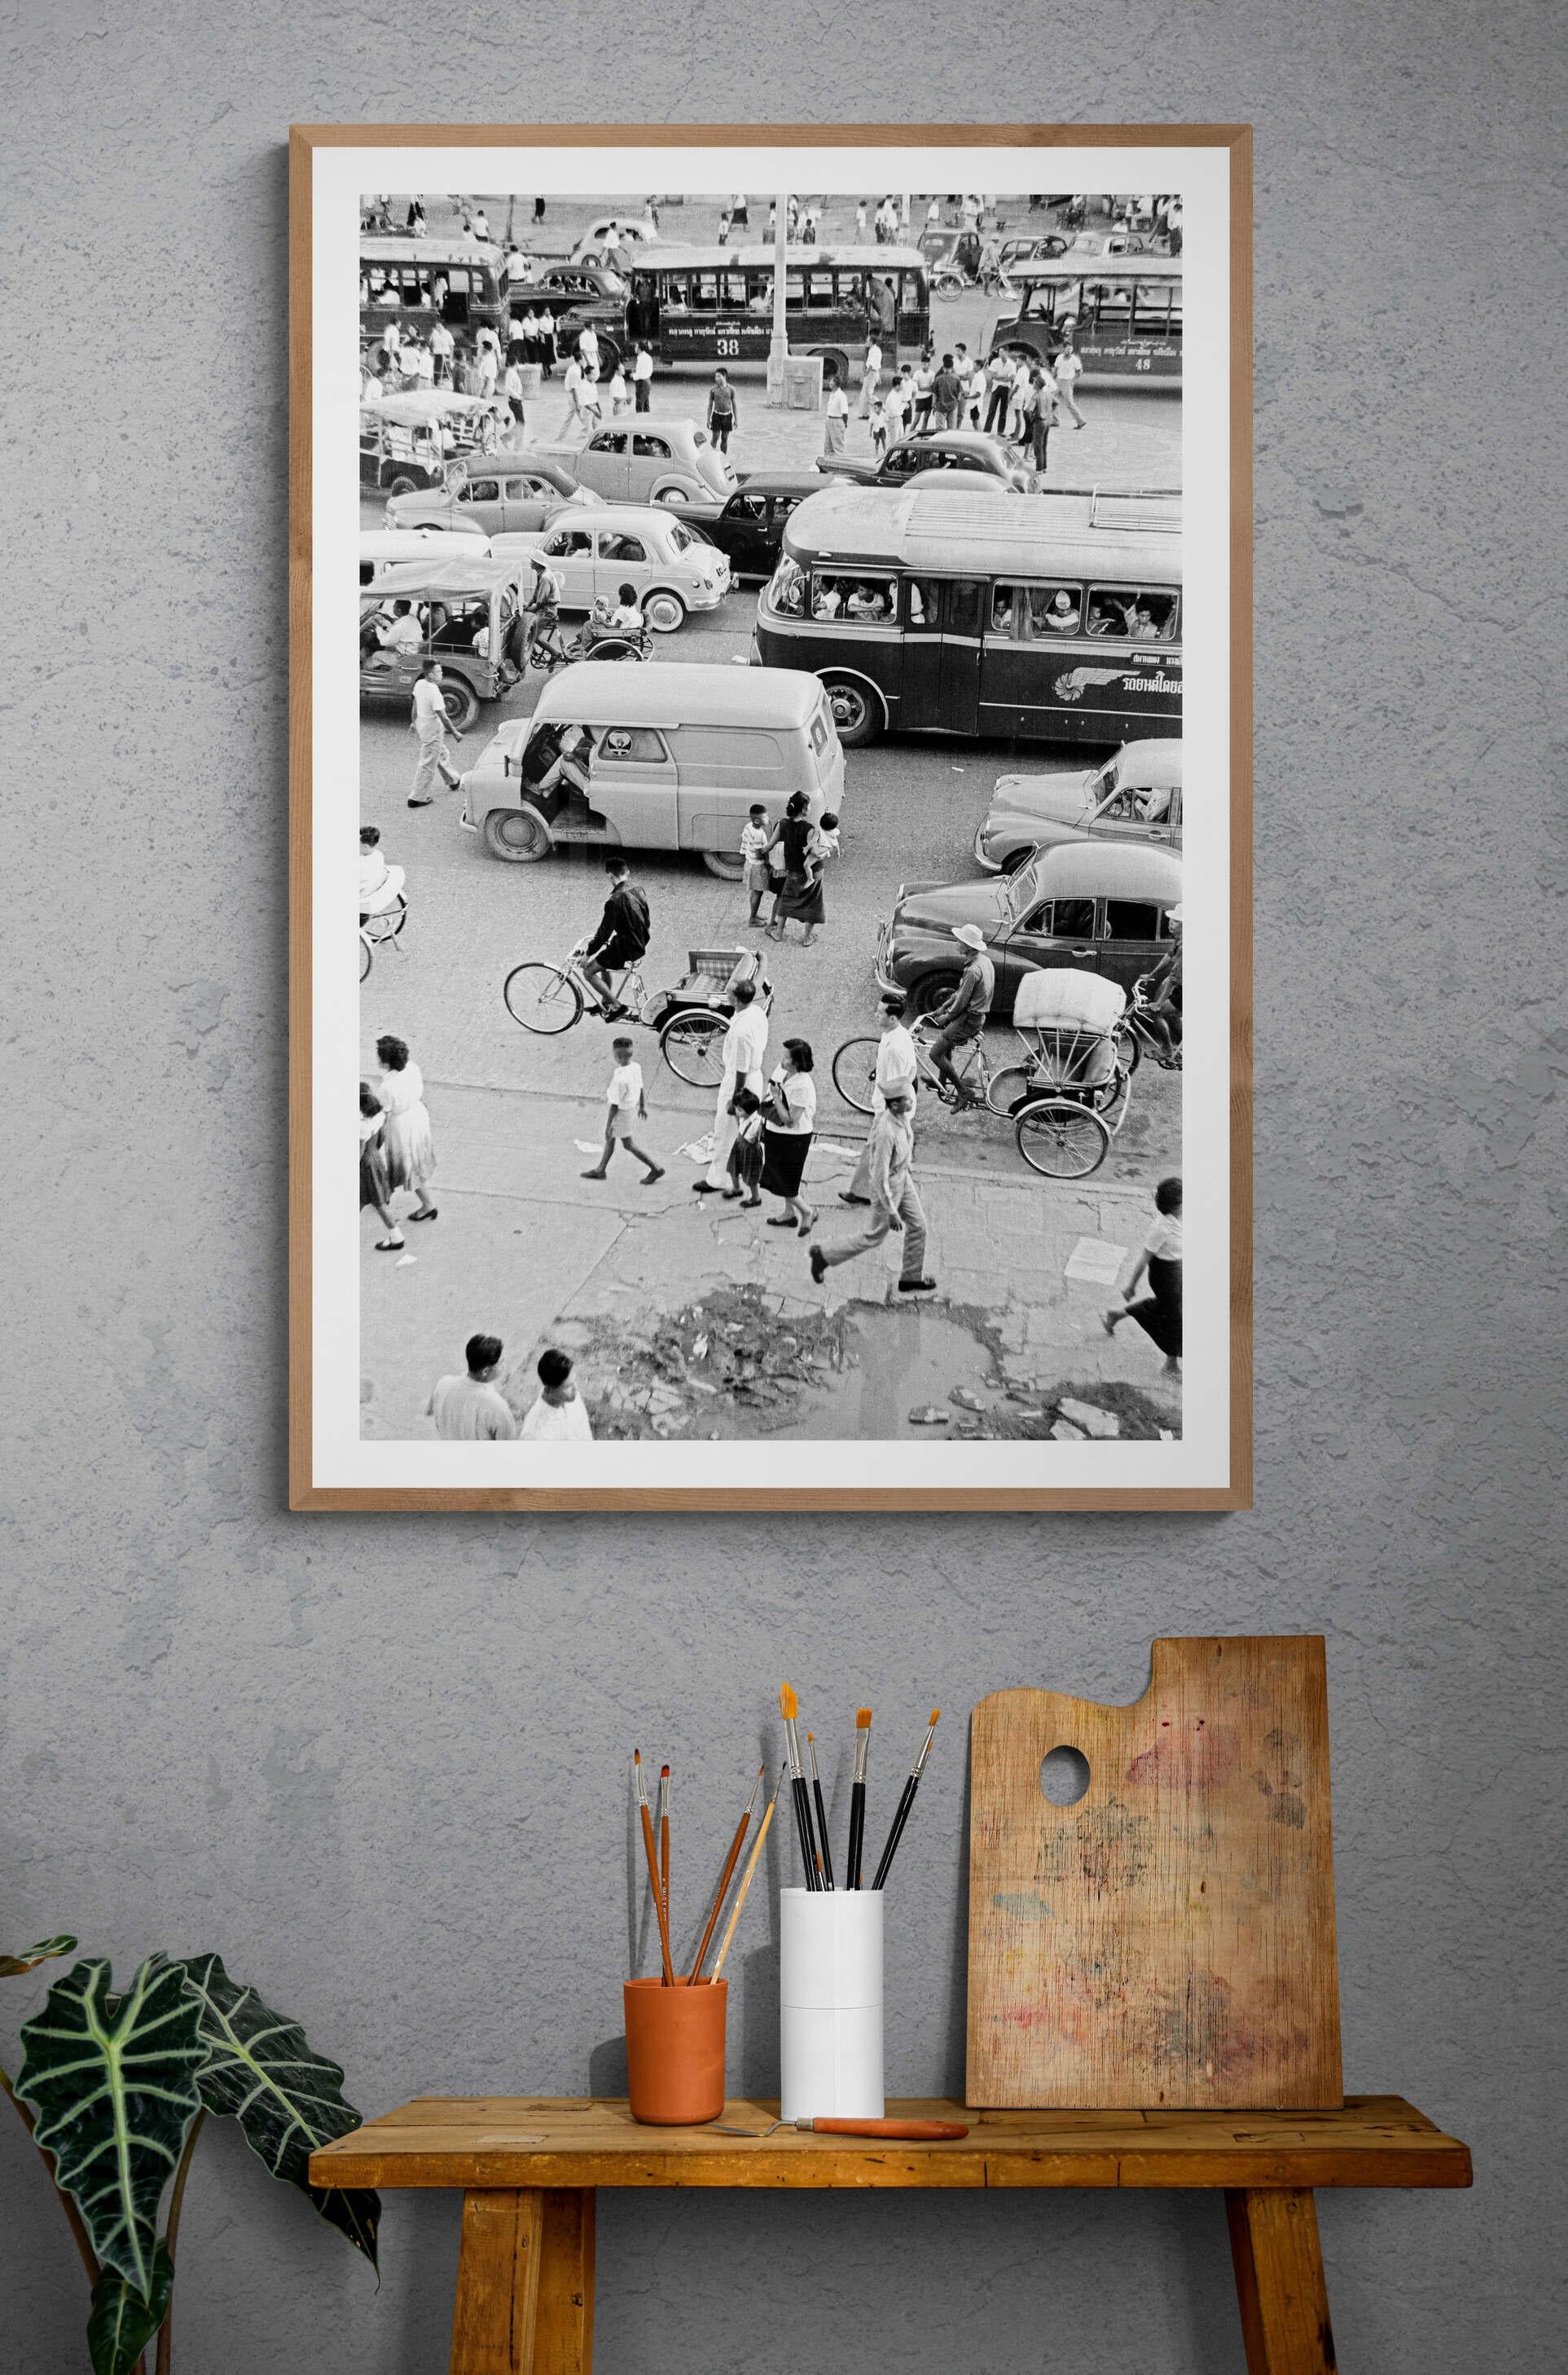 Trafic jam in Bangkok -Thailand 1957 - Full Framed Black & White Fine Art Print - Photograph by Fabrizio La Torre